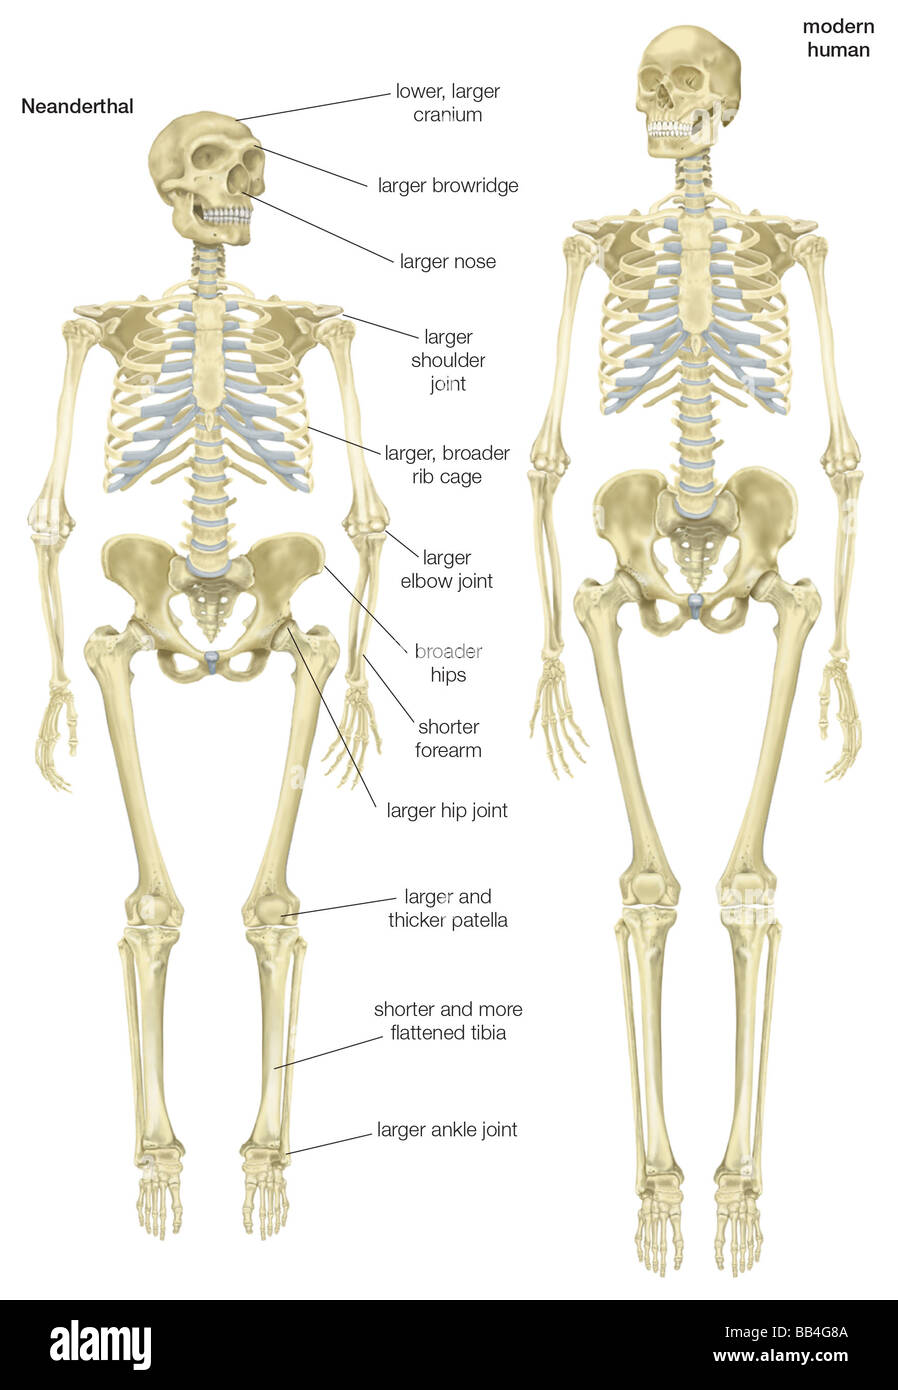 Skeleton of a Neanderthal (Homo neanderthalensis) compared with a skeleton of a modern human (Homo sapiens). Stock Photo